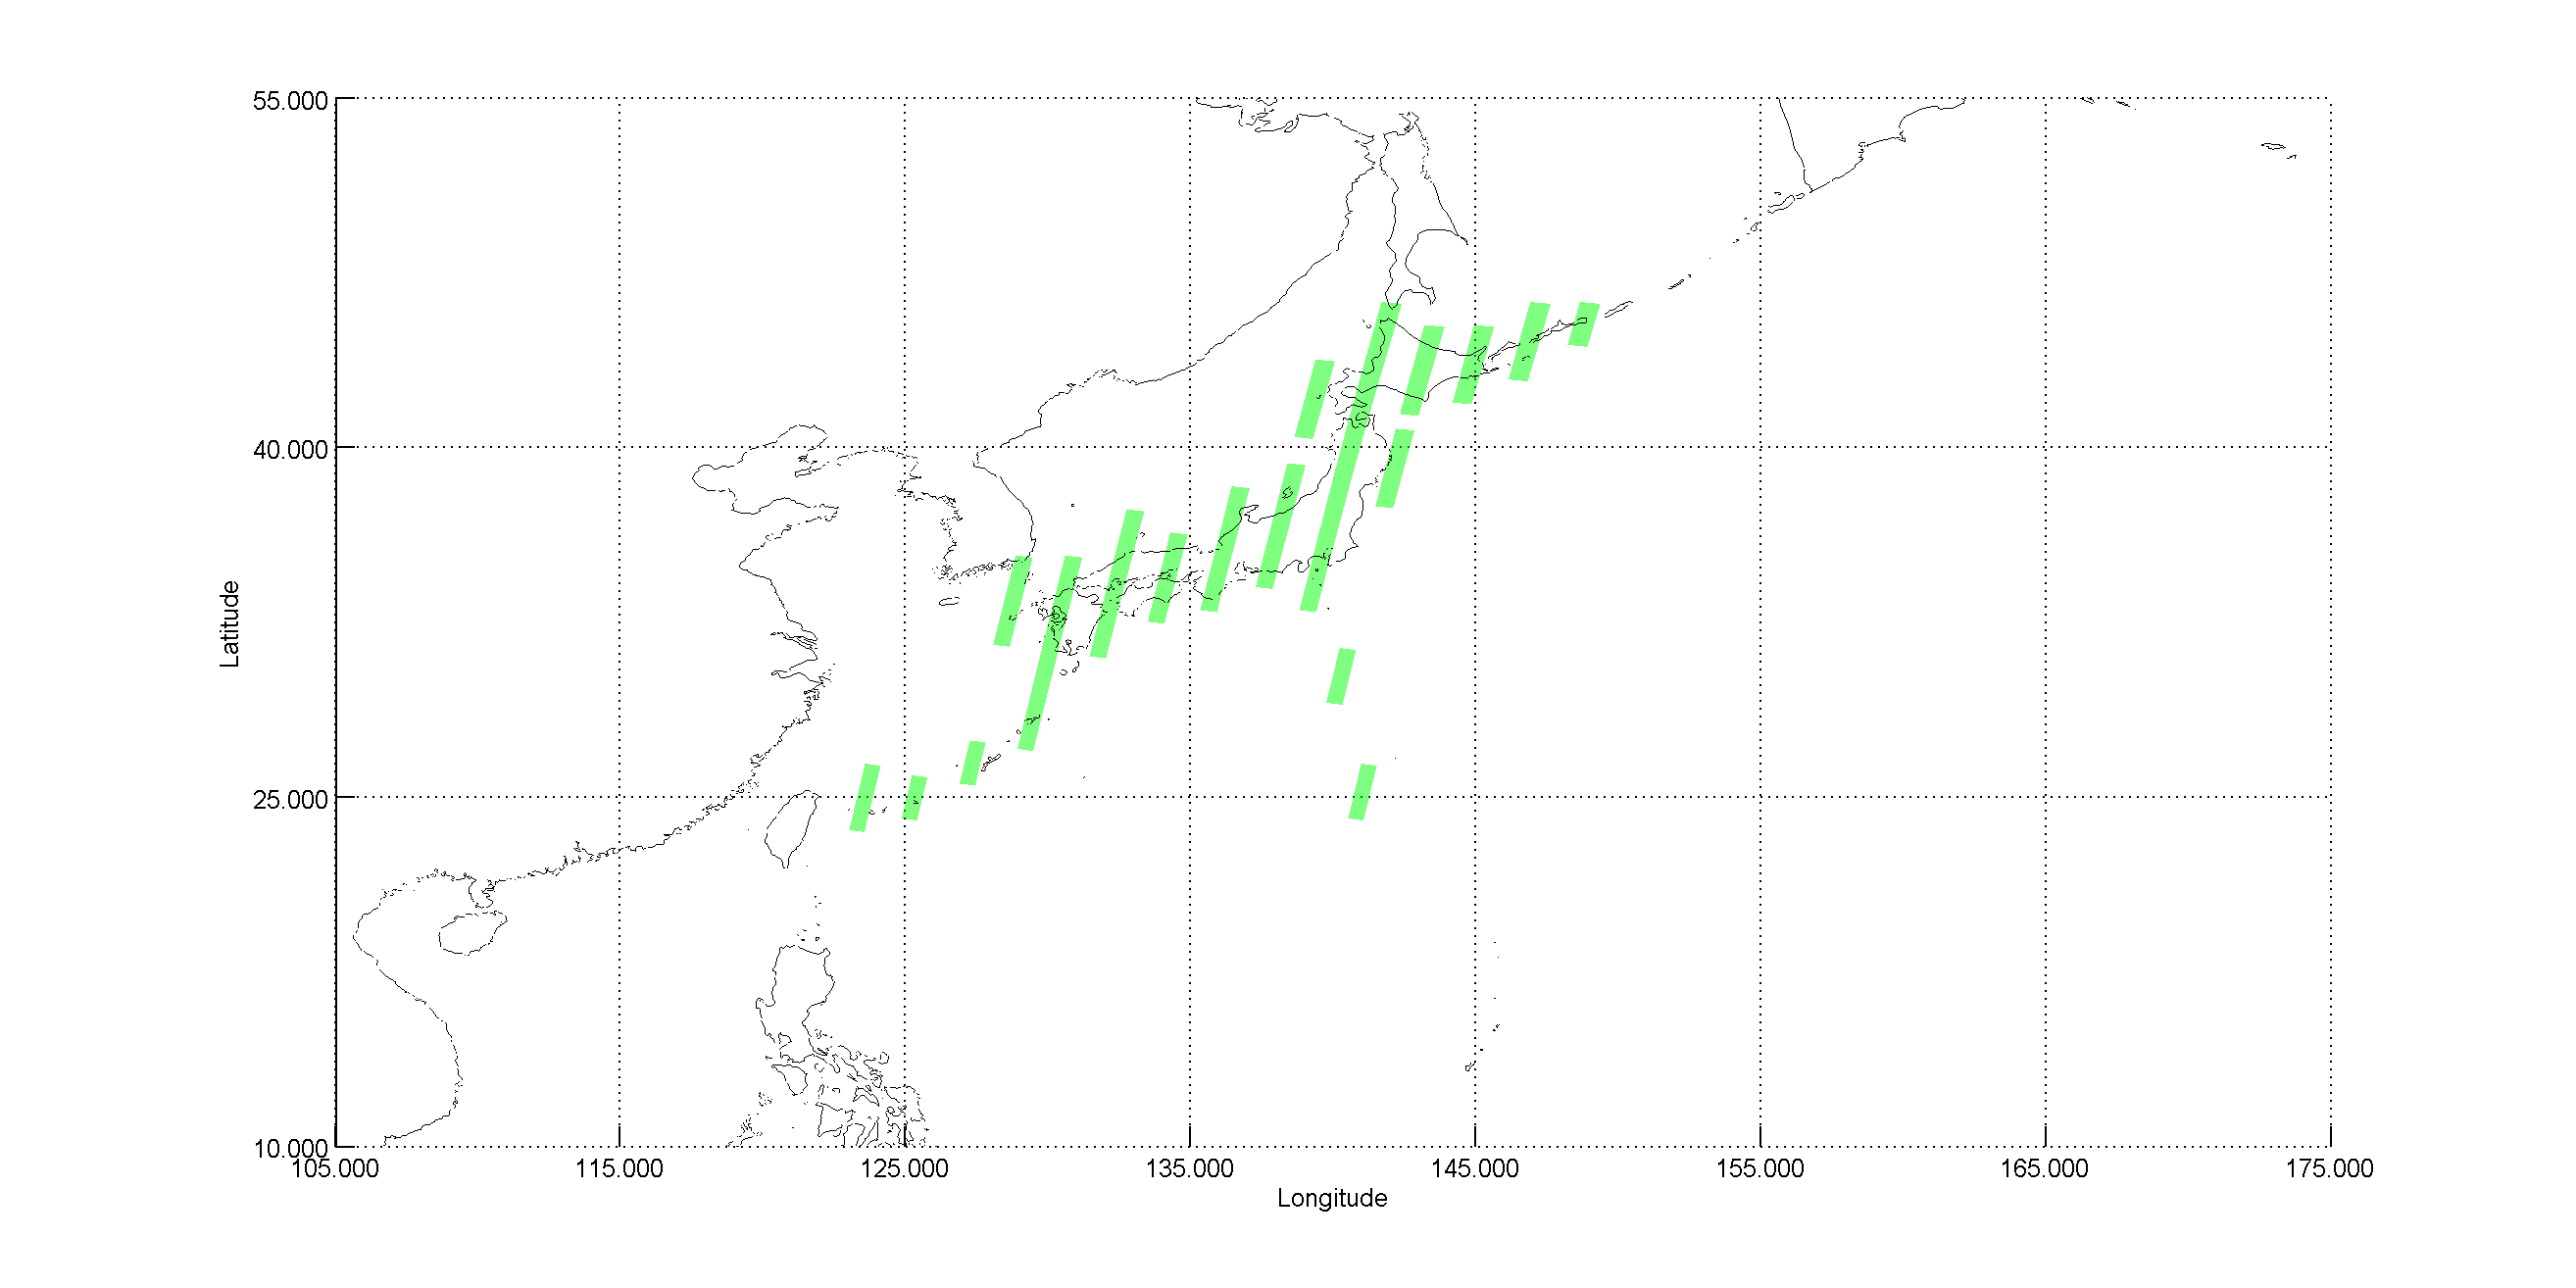 CYCLE_148 - Japan Descending passes